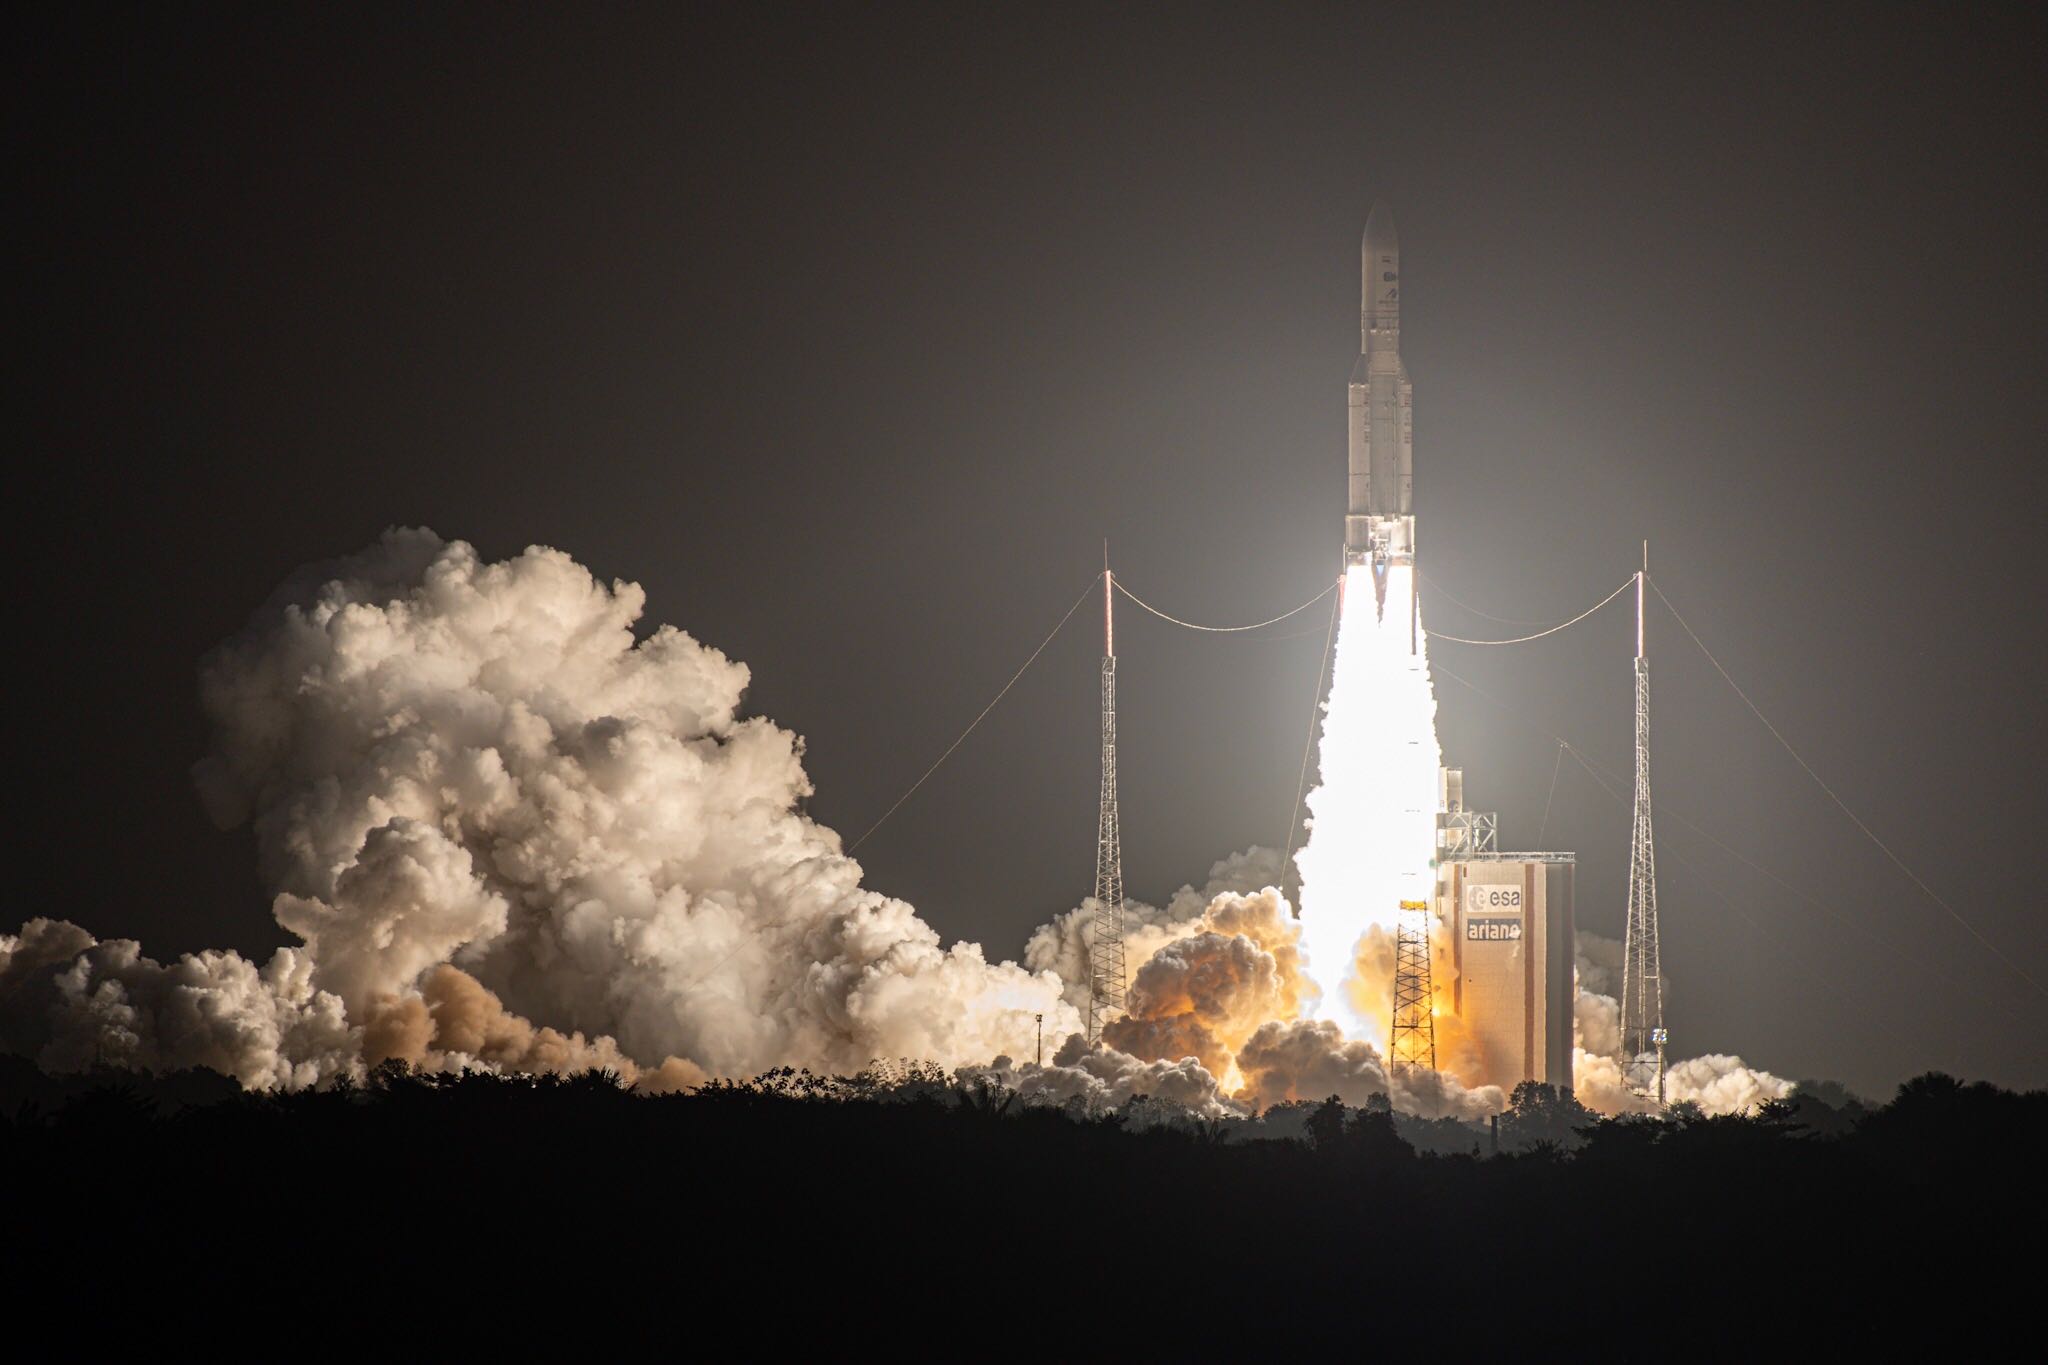 http://www.esa.int/var/esa/storage/images/esa_multimedia/images/2019/11/ariane_5_liftoff3/21479988-4-eng-GB/Ariane_5_liftoff.jpg